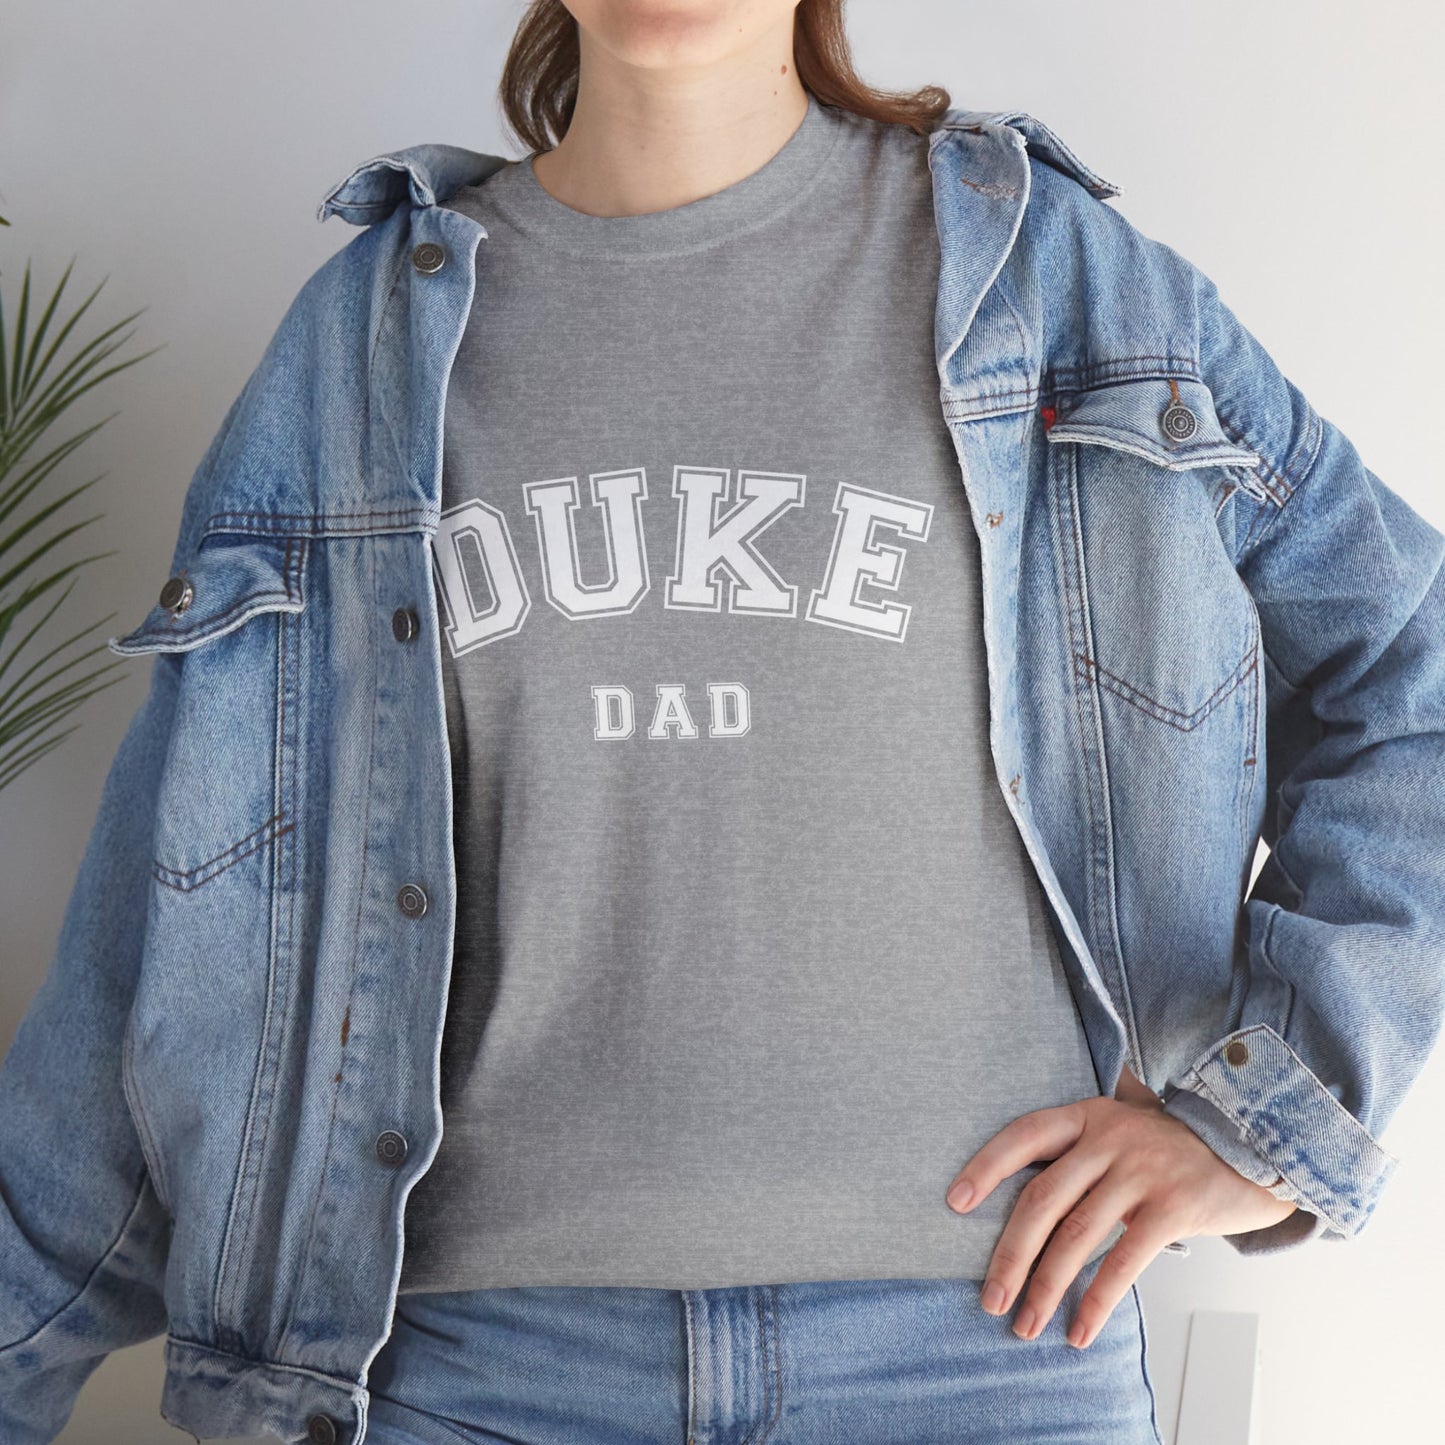 DUKE Dad, parent shirt T-shirt-Adult, Unisex Heavy Cotton Tee